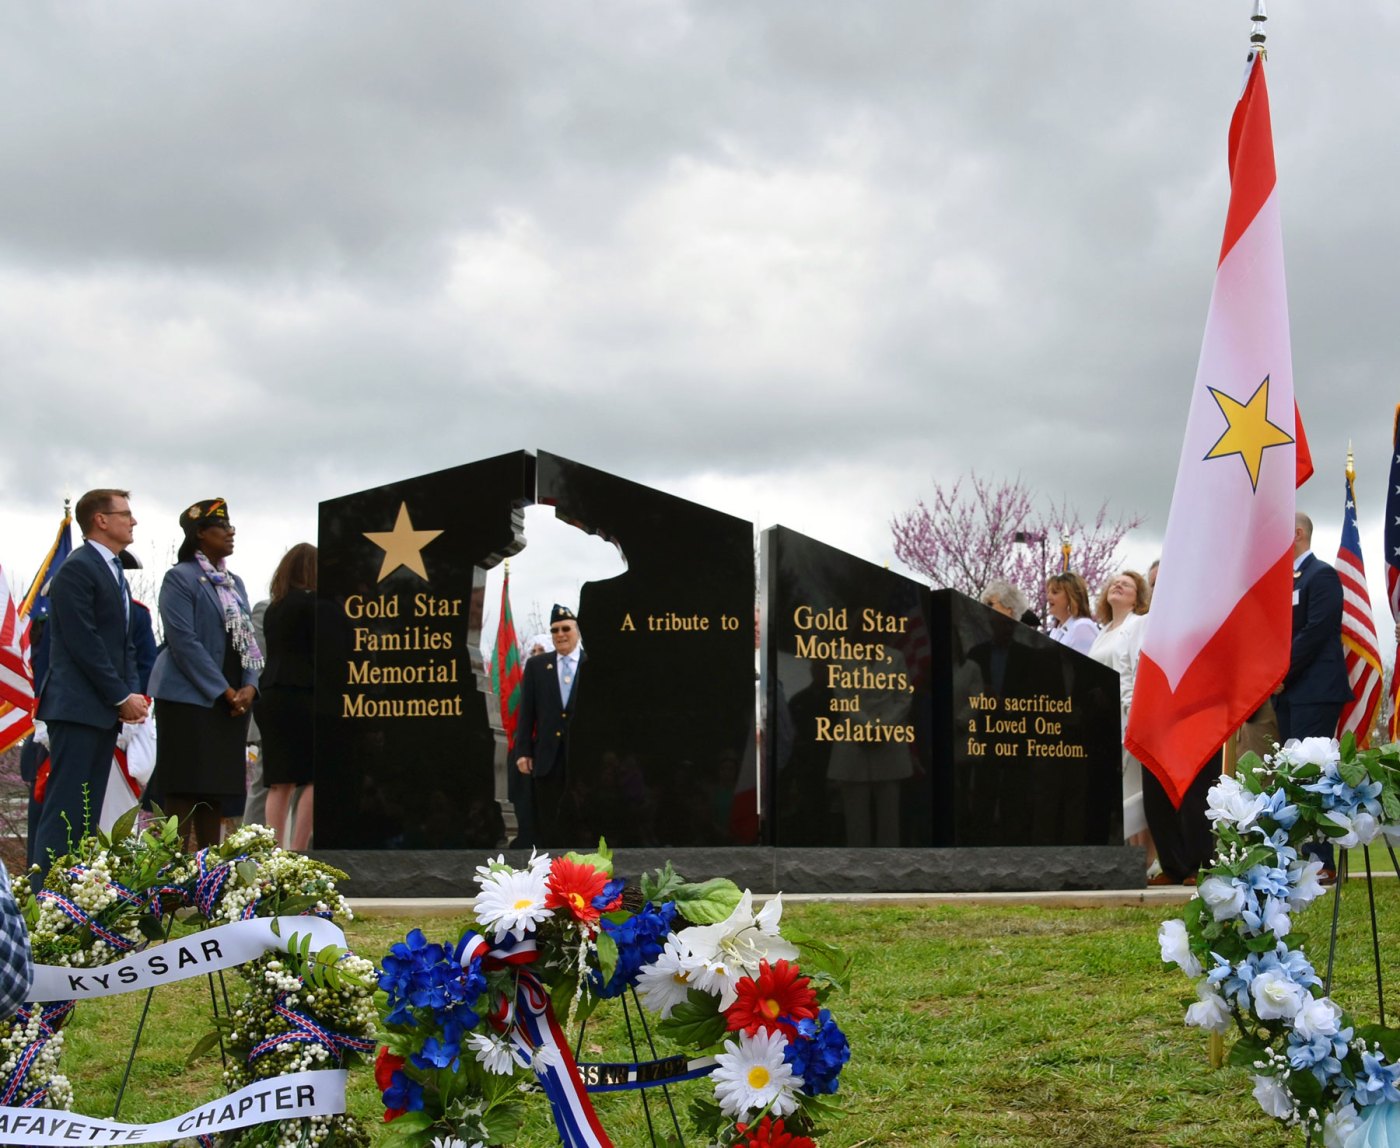 The Gold Star Families Memorial Monument at Lexington, Kentucky's Veterans Park.